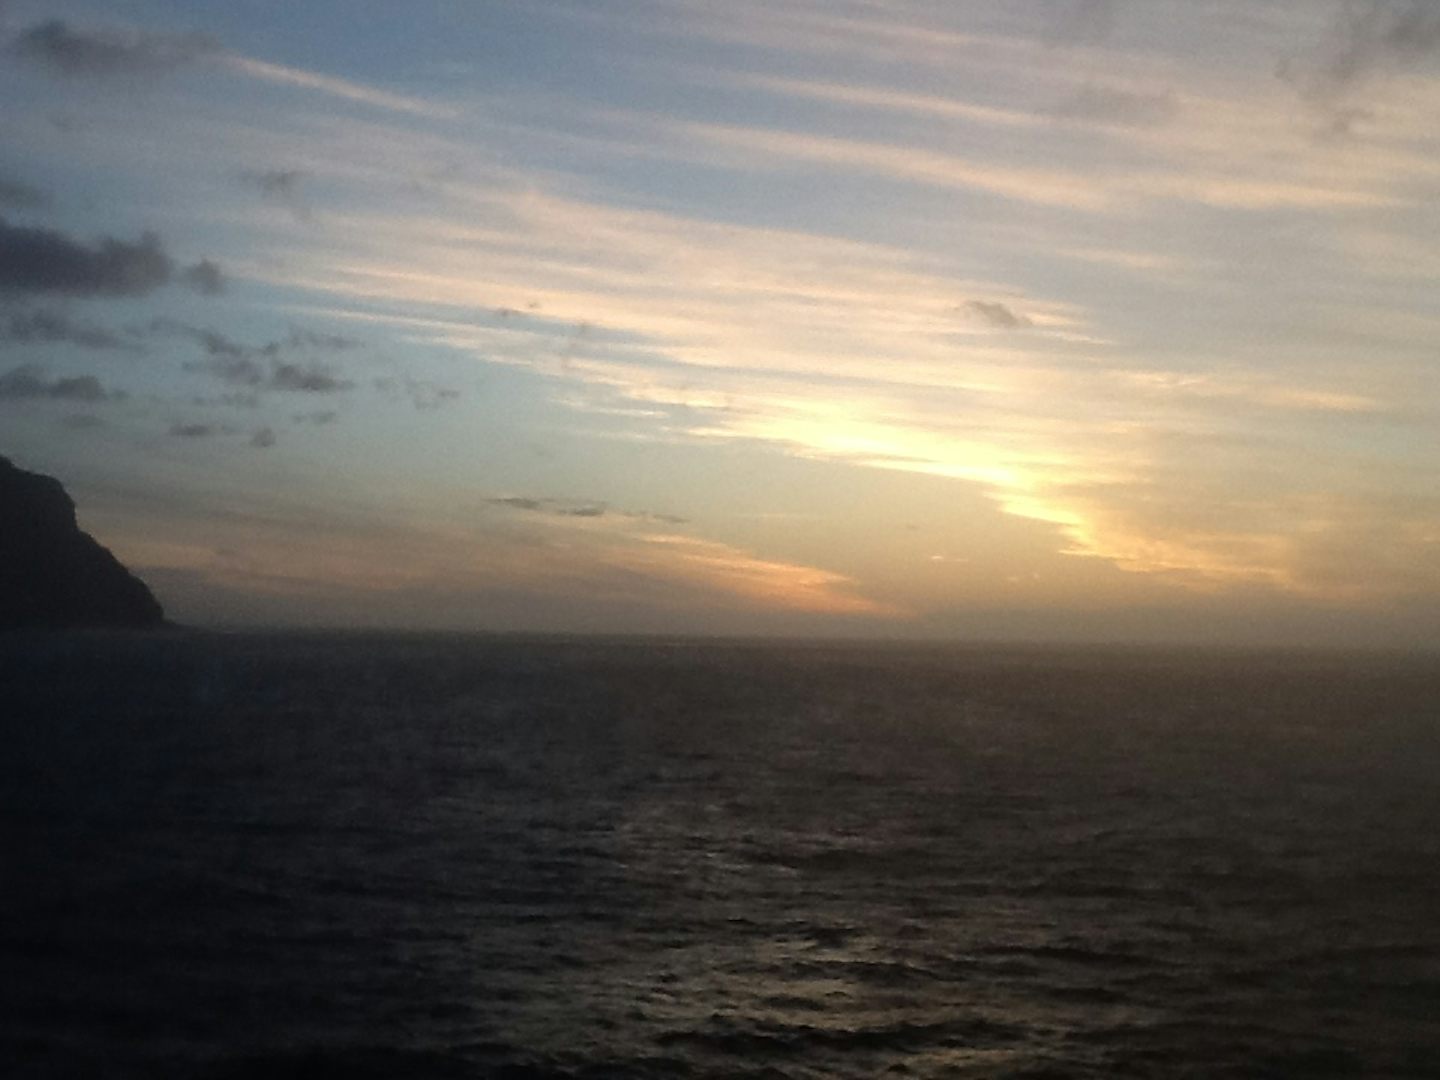 Heading into the sunset off of Kauai